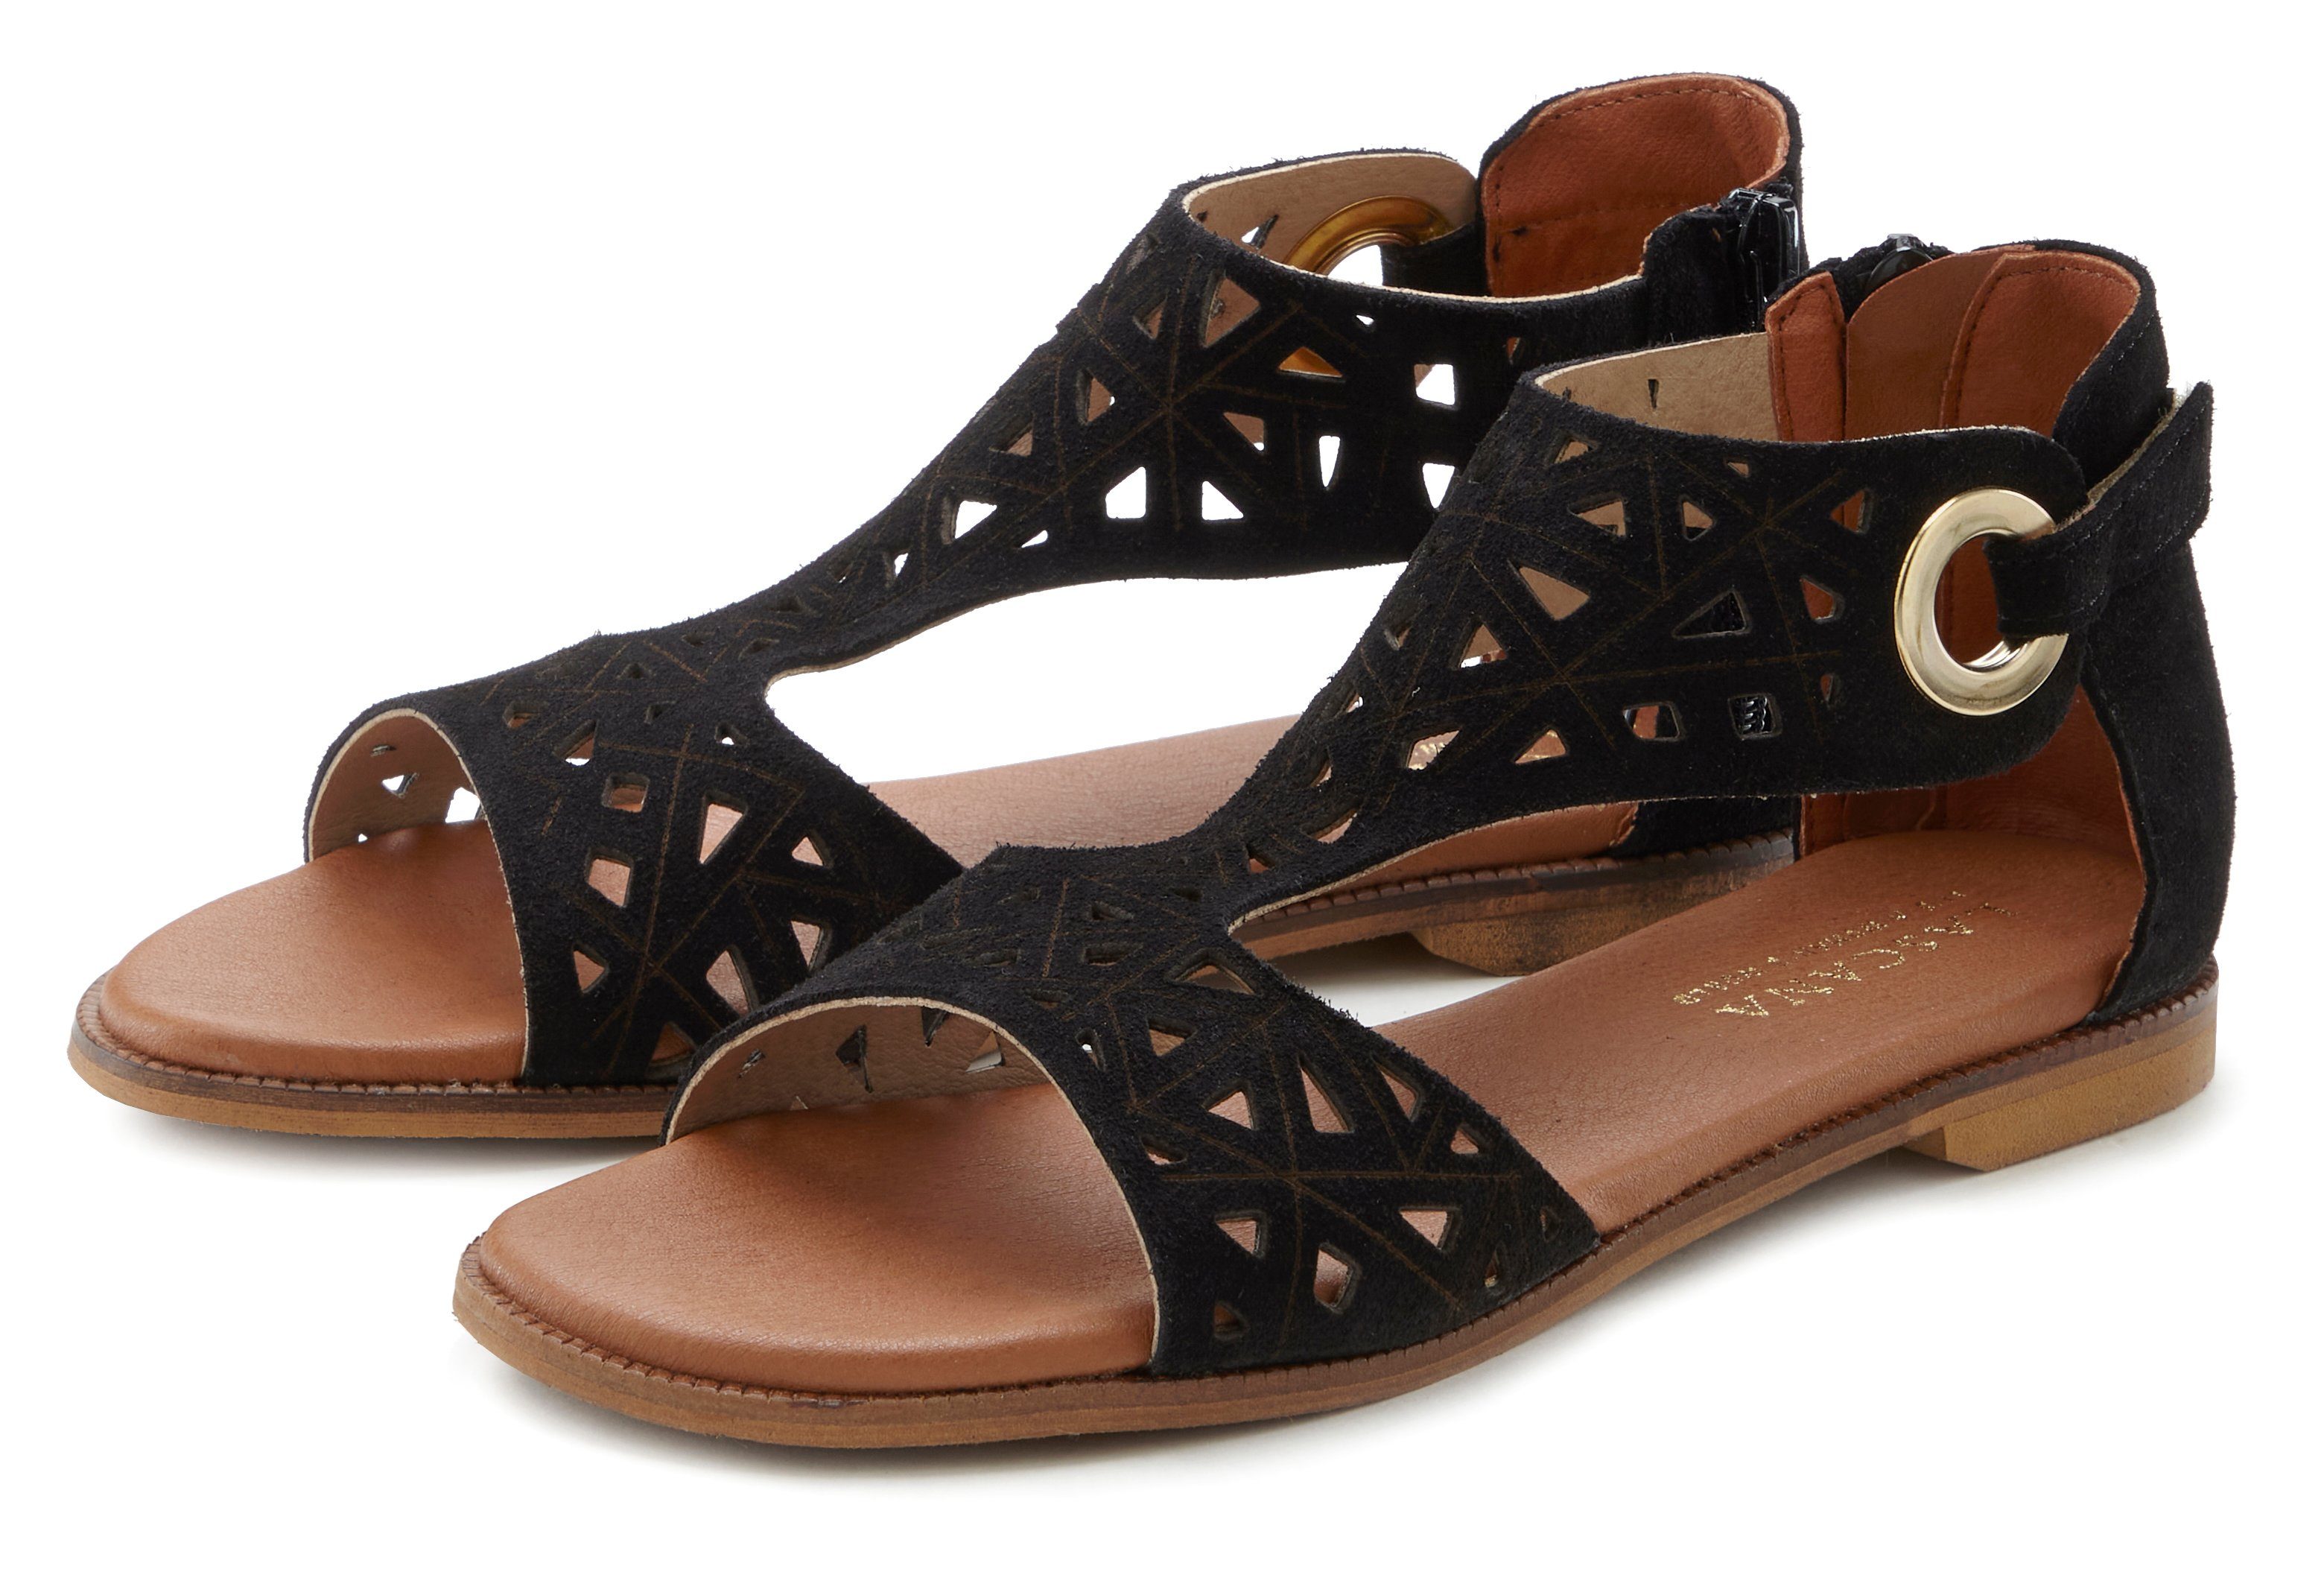 LASCANA Sandale Sandalette, hochwertigem Sommerschuh Leder schwarz aus Cut-Outs mit